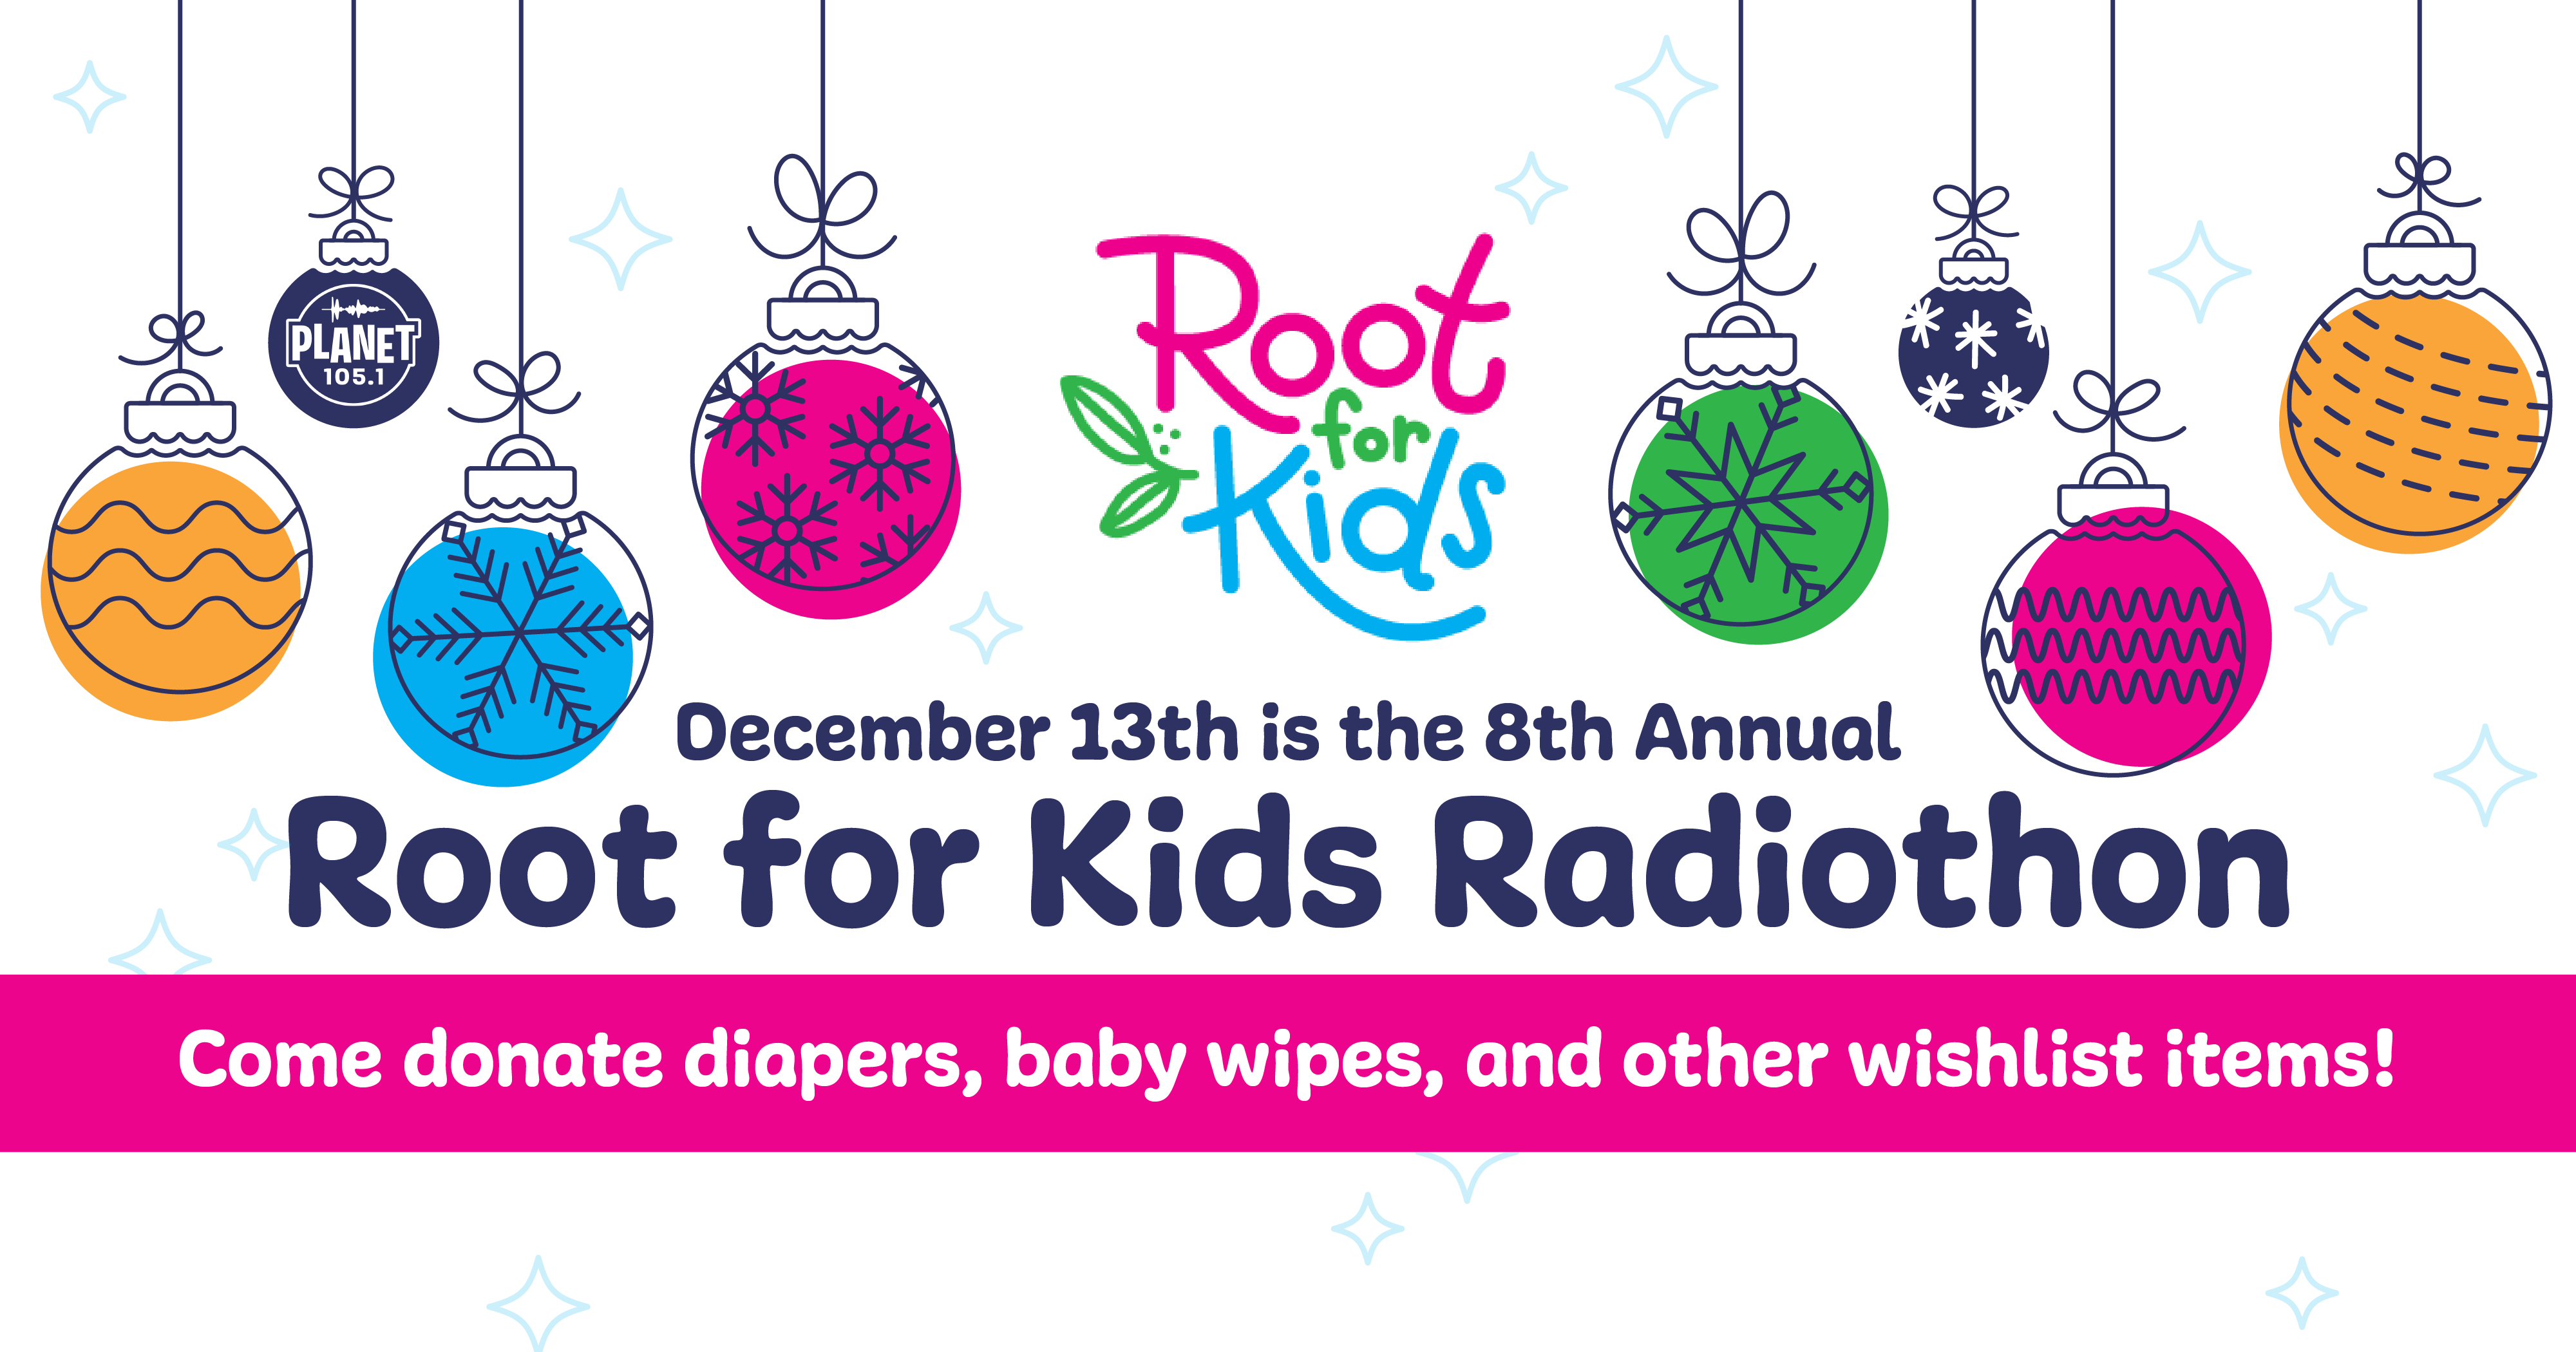 Planet 105.1 Root for Kids Radiothon